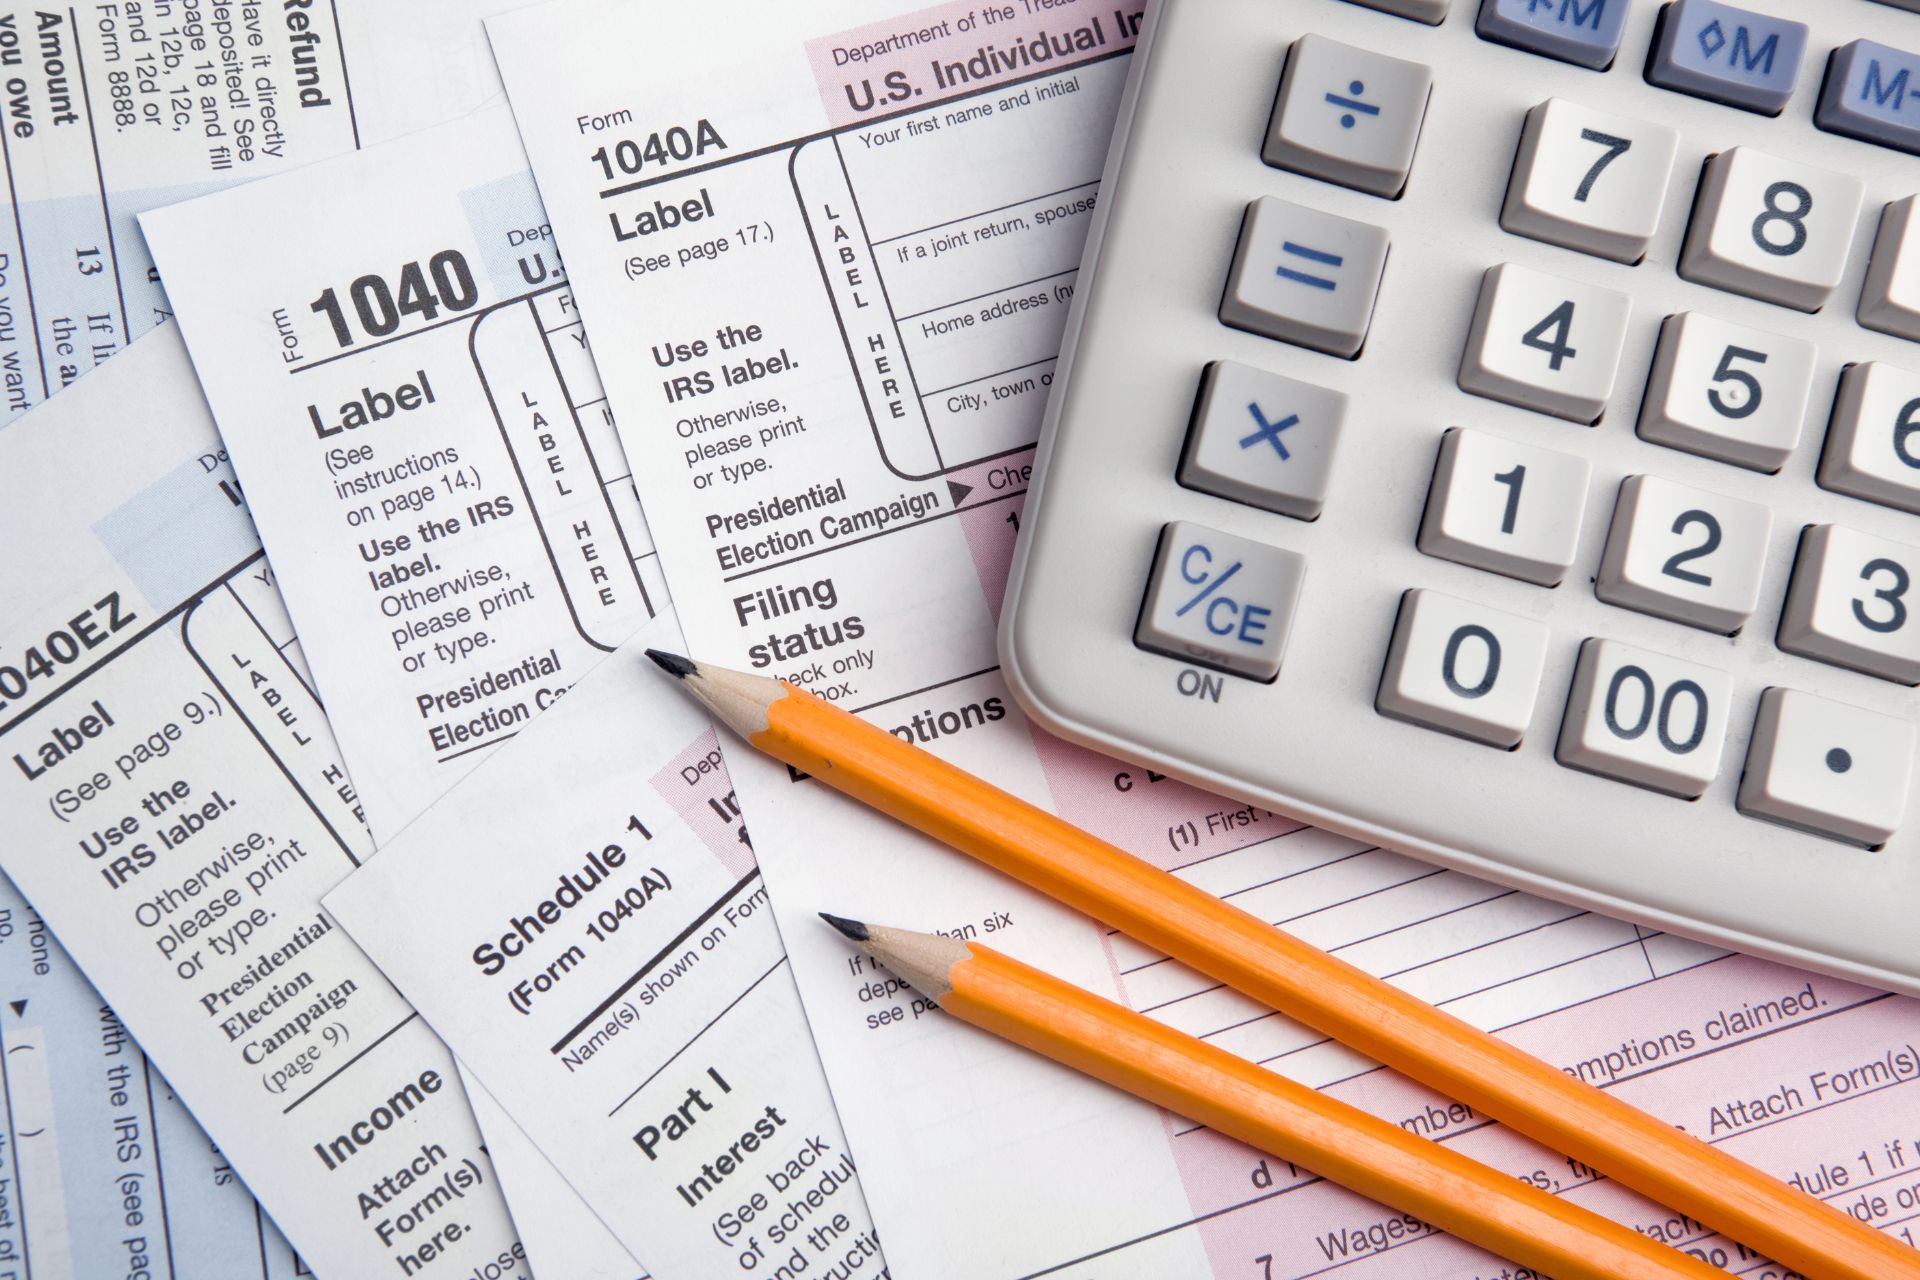 Tax preparation materials